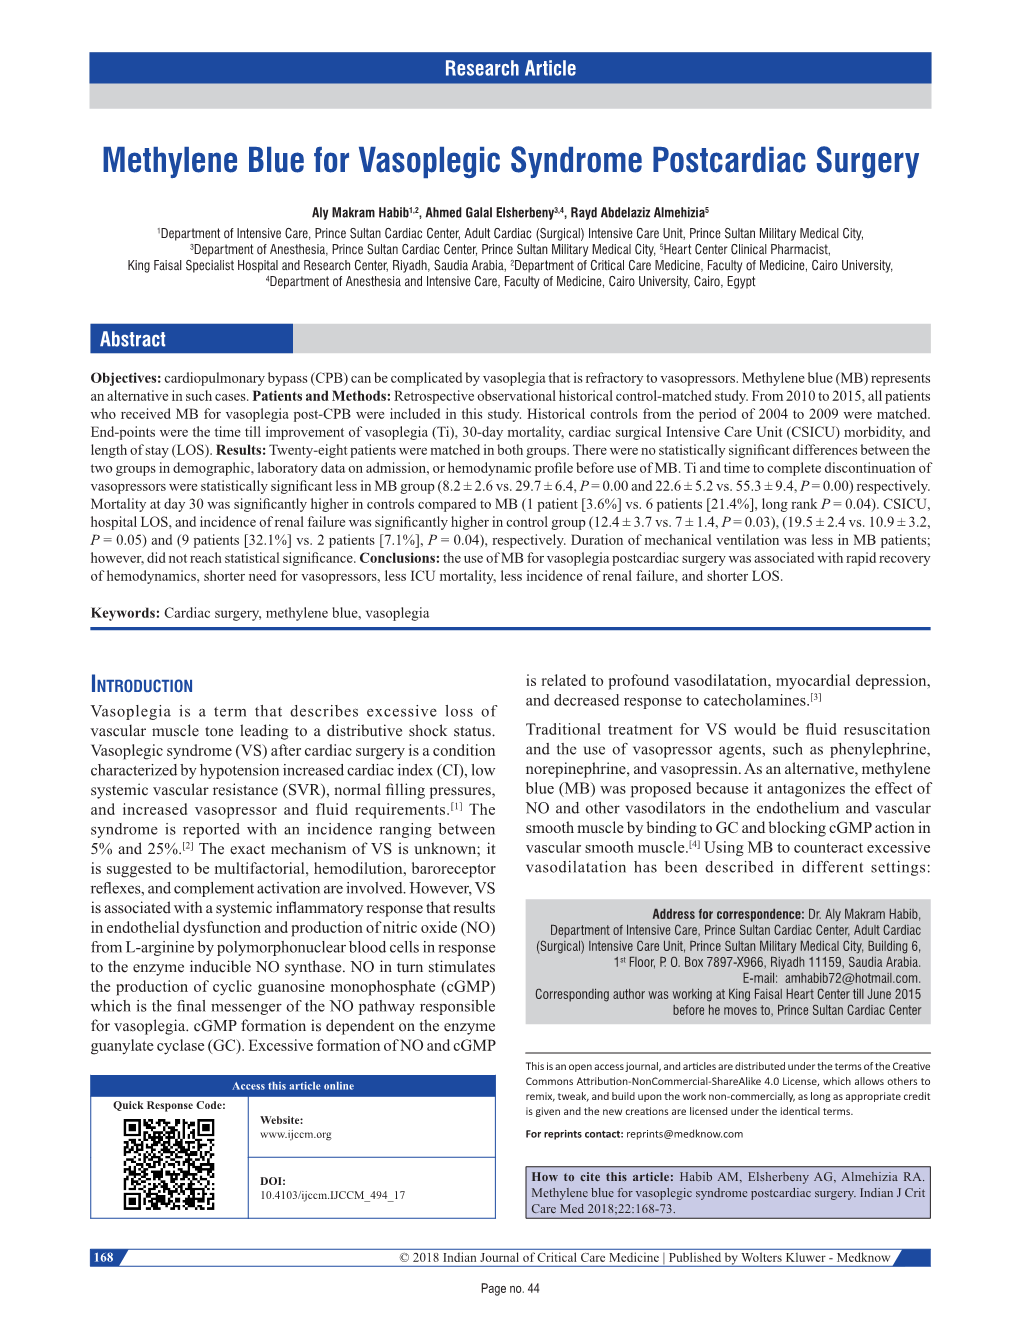 Methylene Blue for Vasoplegic Syndrome Postcardiac Surgery